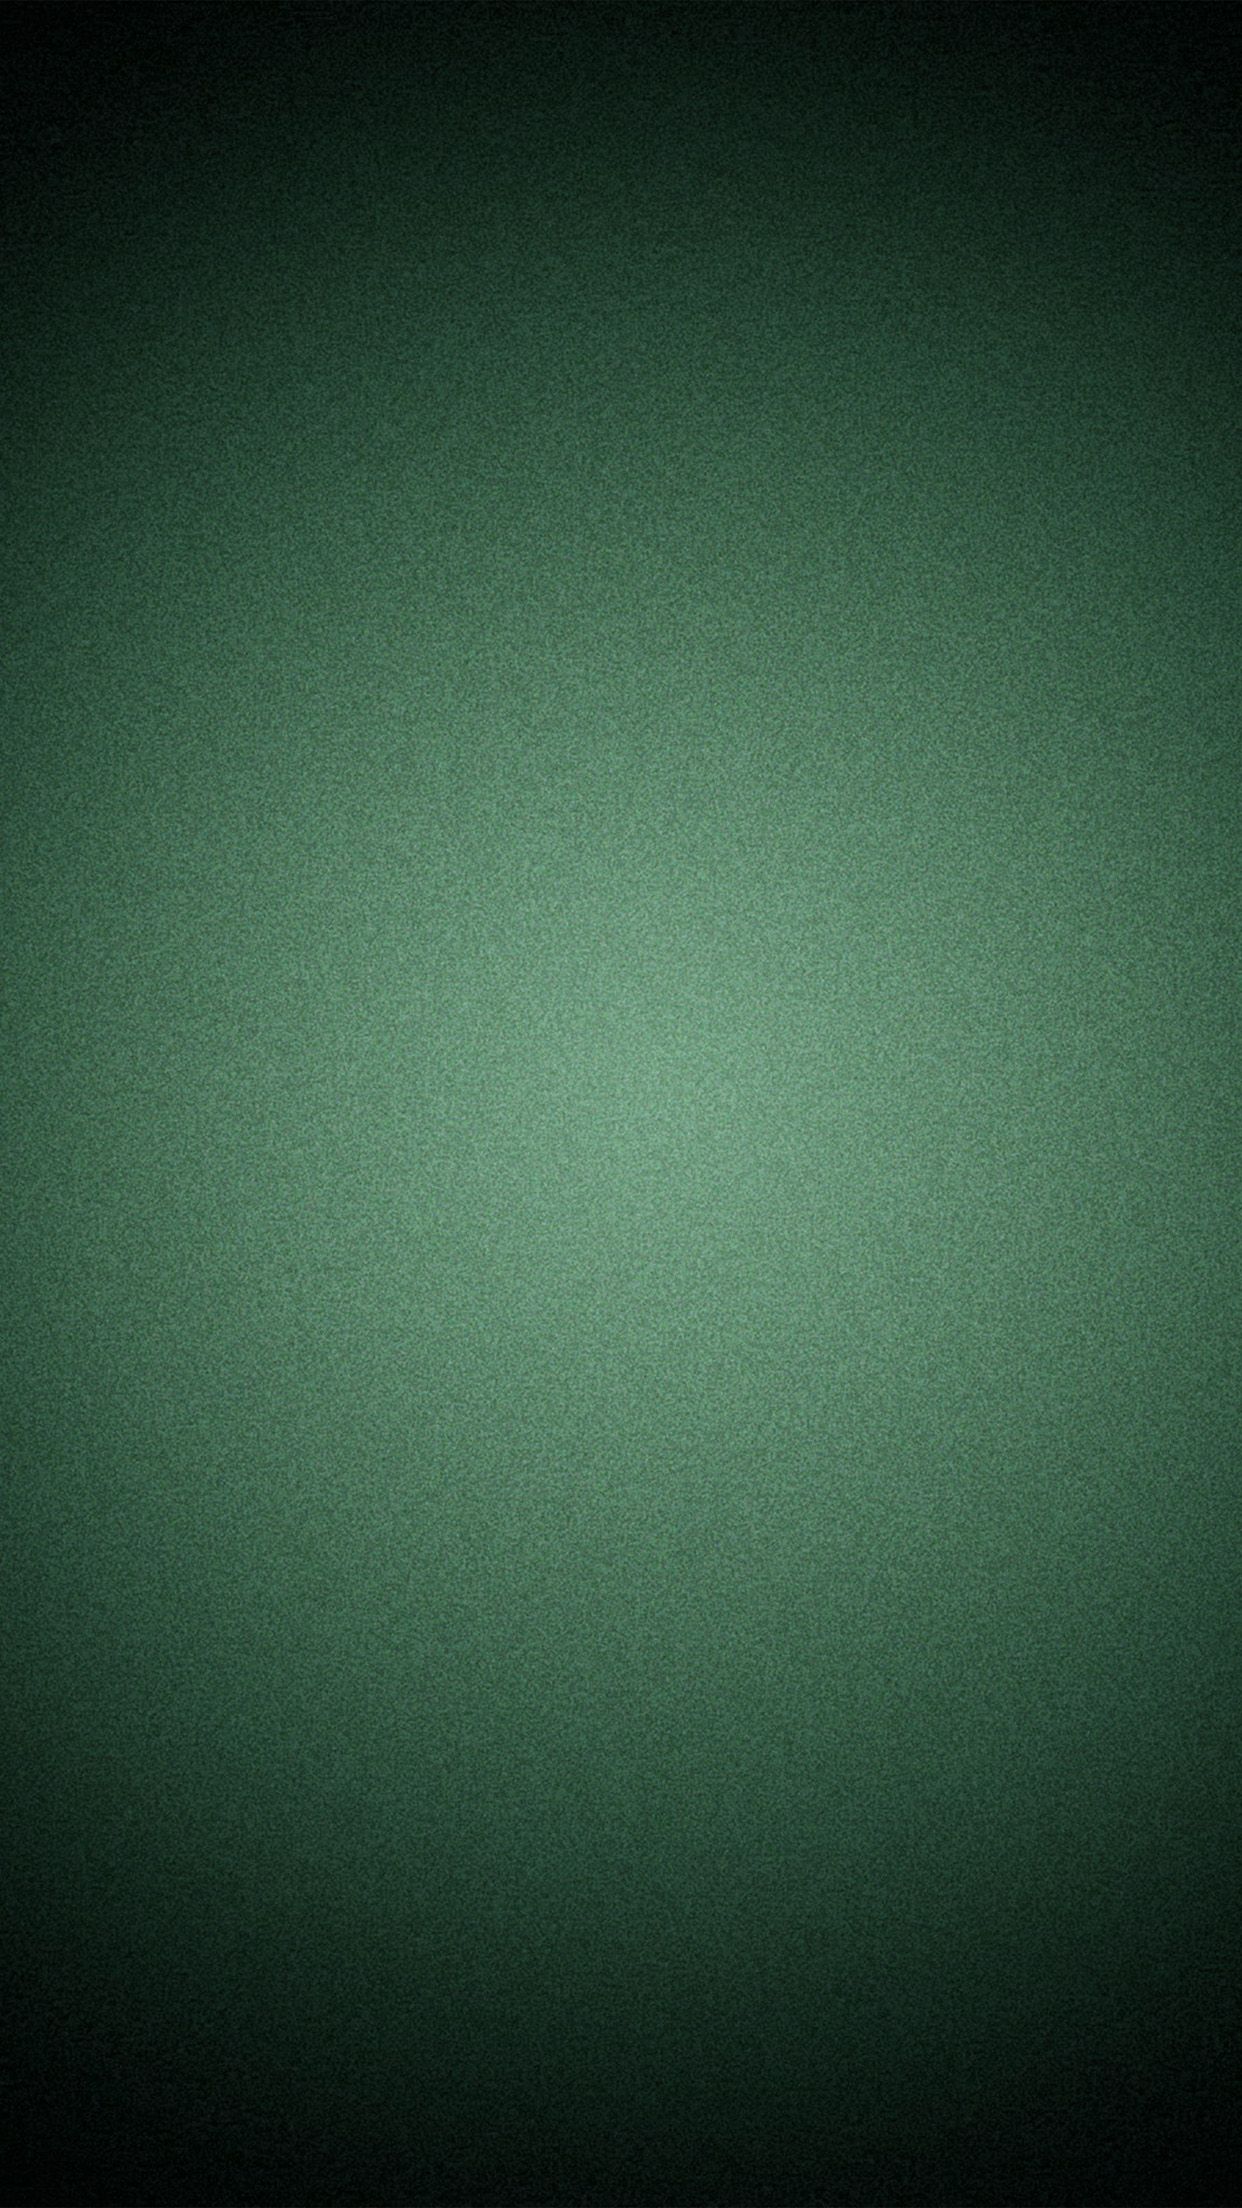 iPhone wallpaper. circle vignette dark green pattern